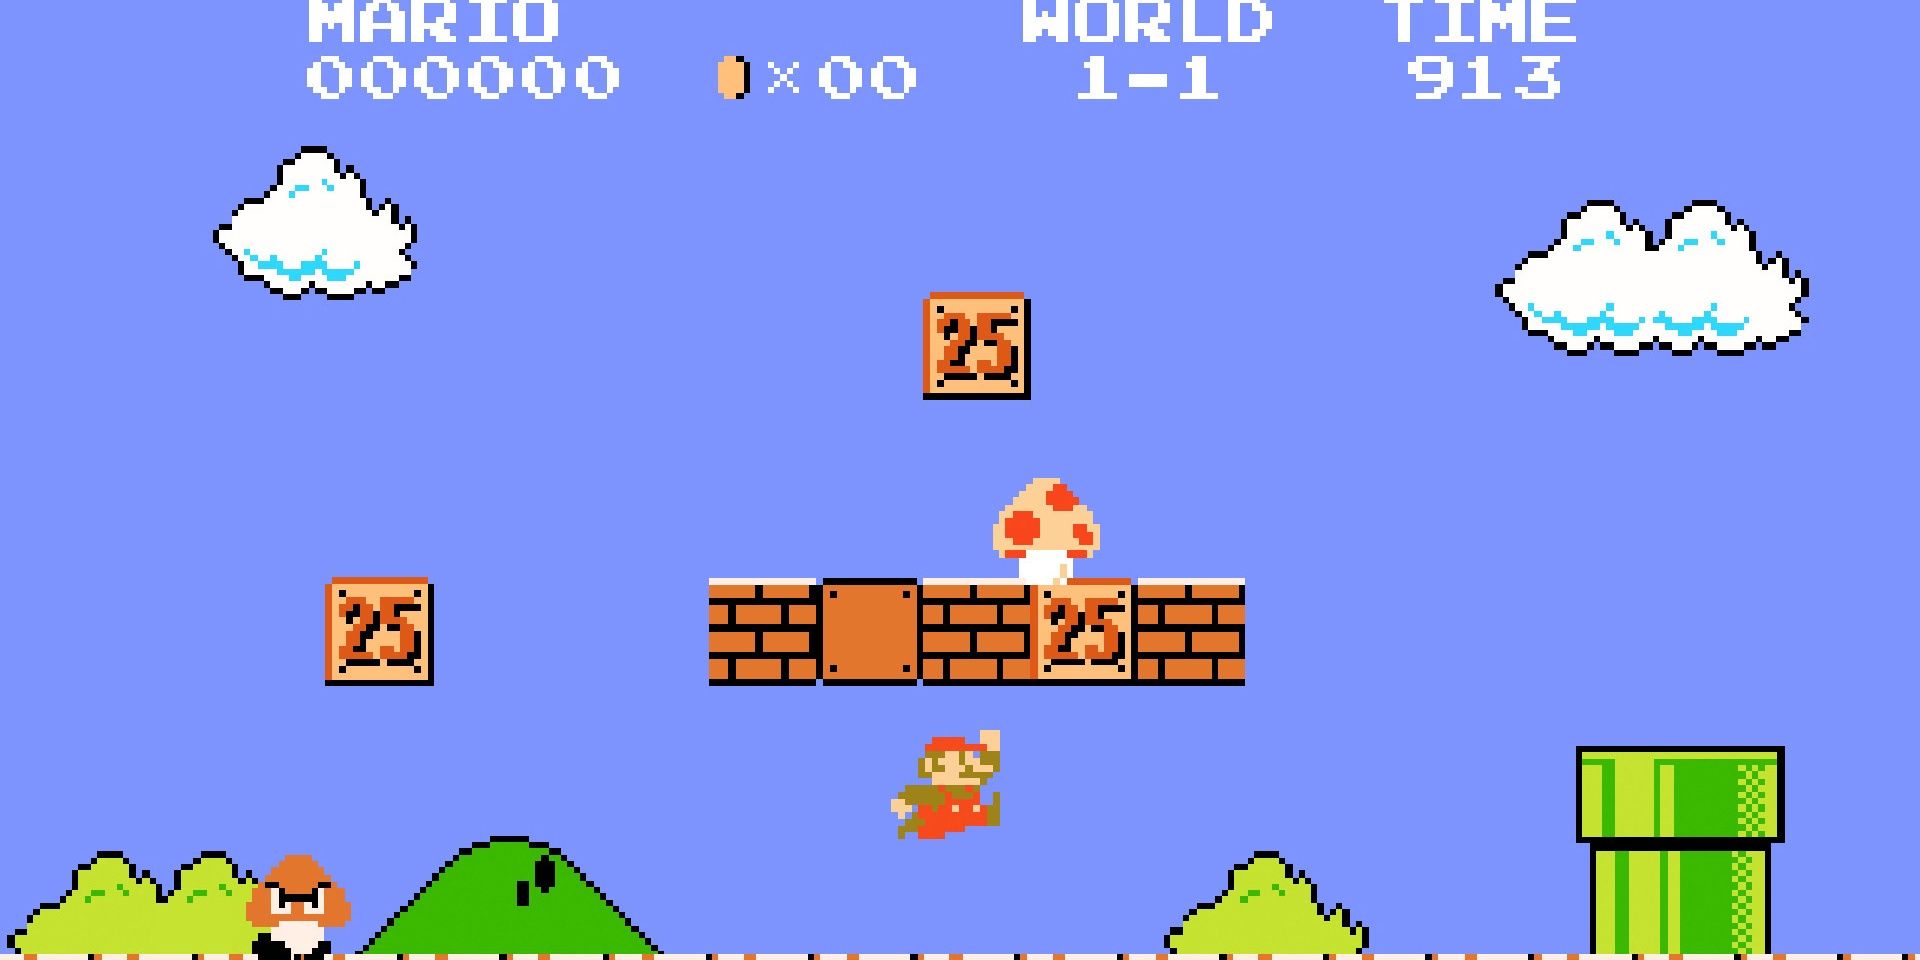 Mario jumping and hitting block for a mushroom in Super Mario bros 